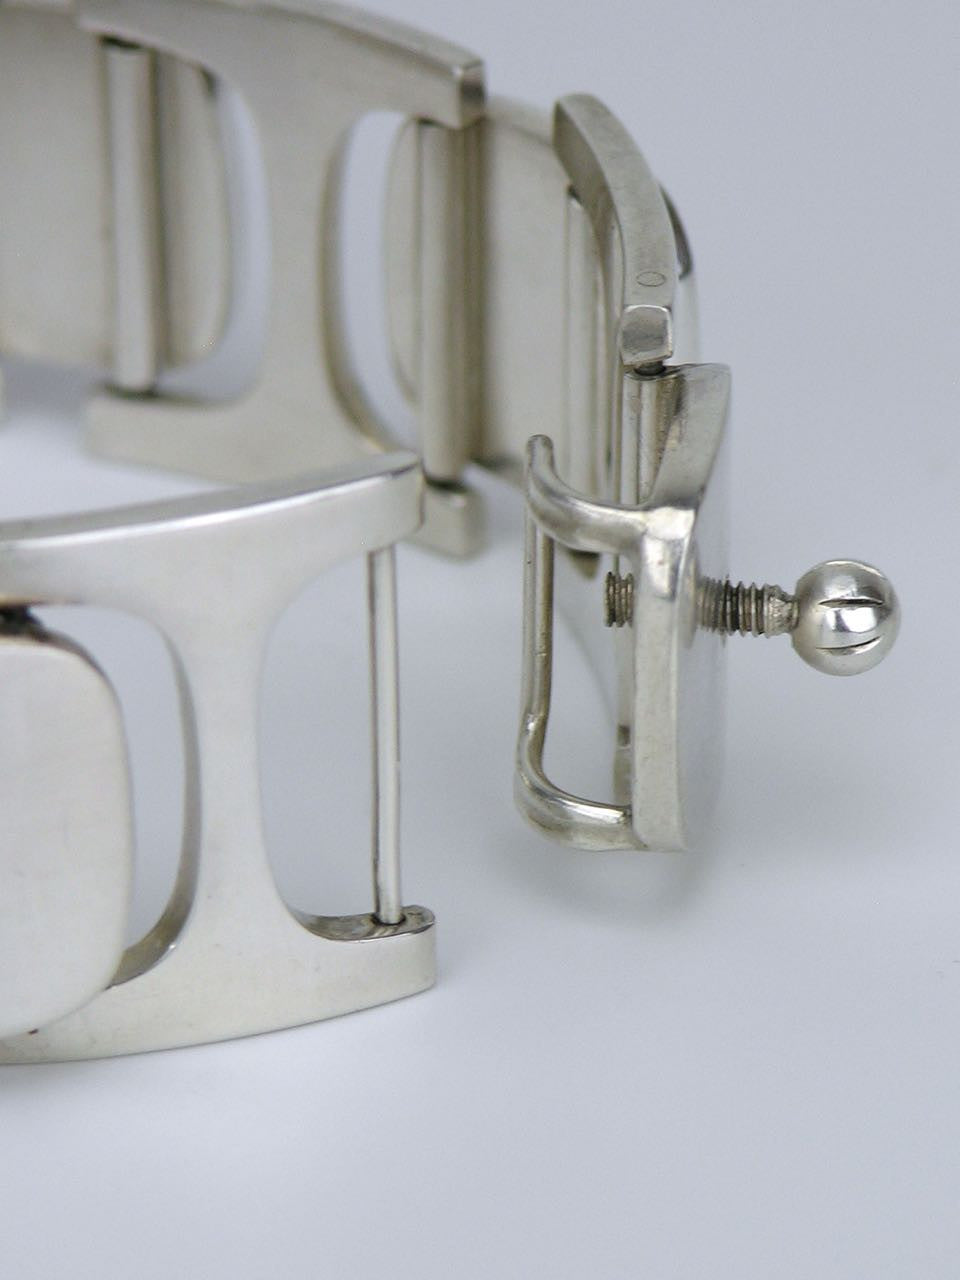 Bent Knudsen silver link bracelet